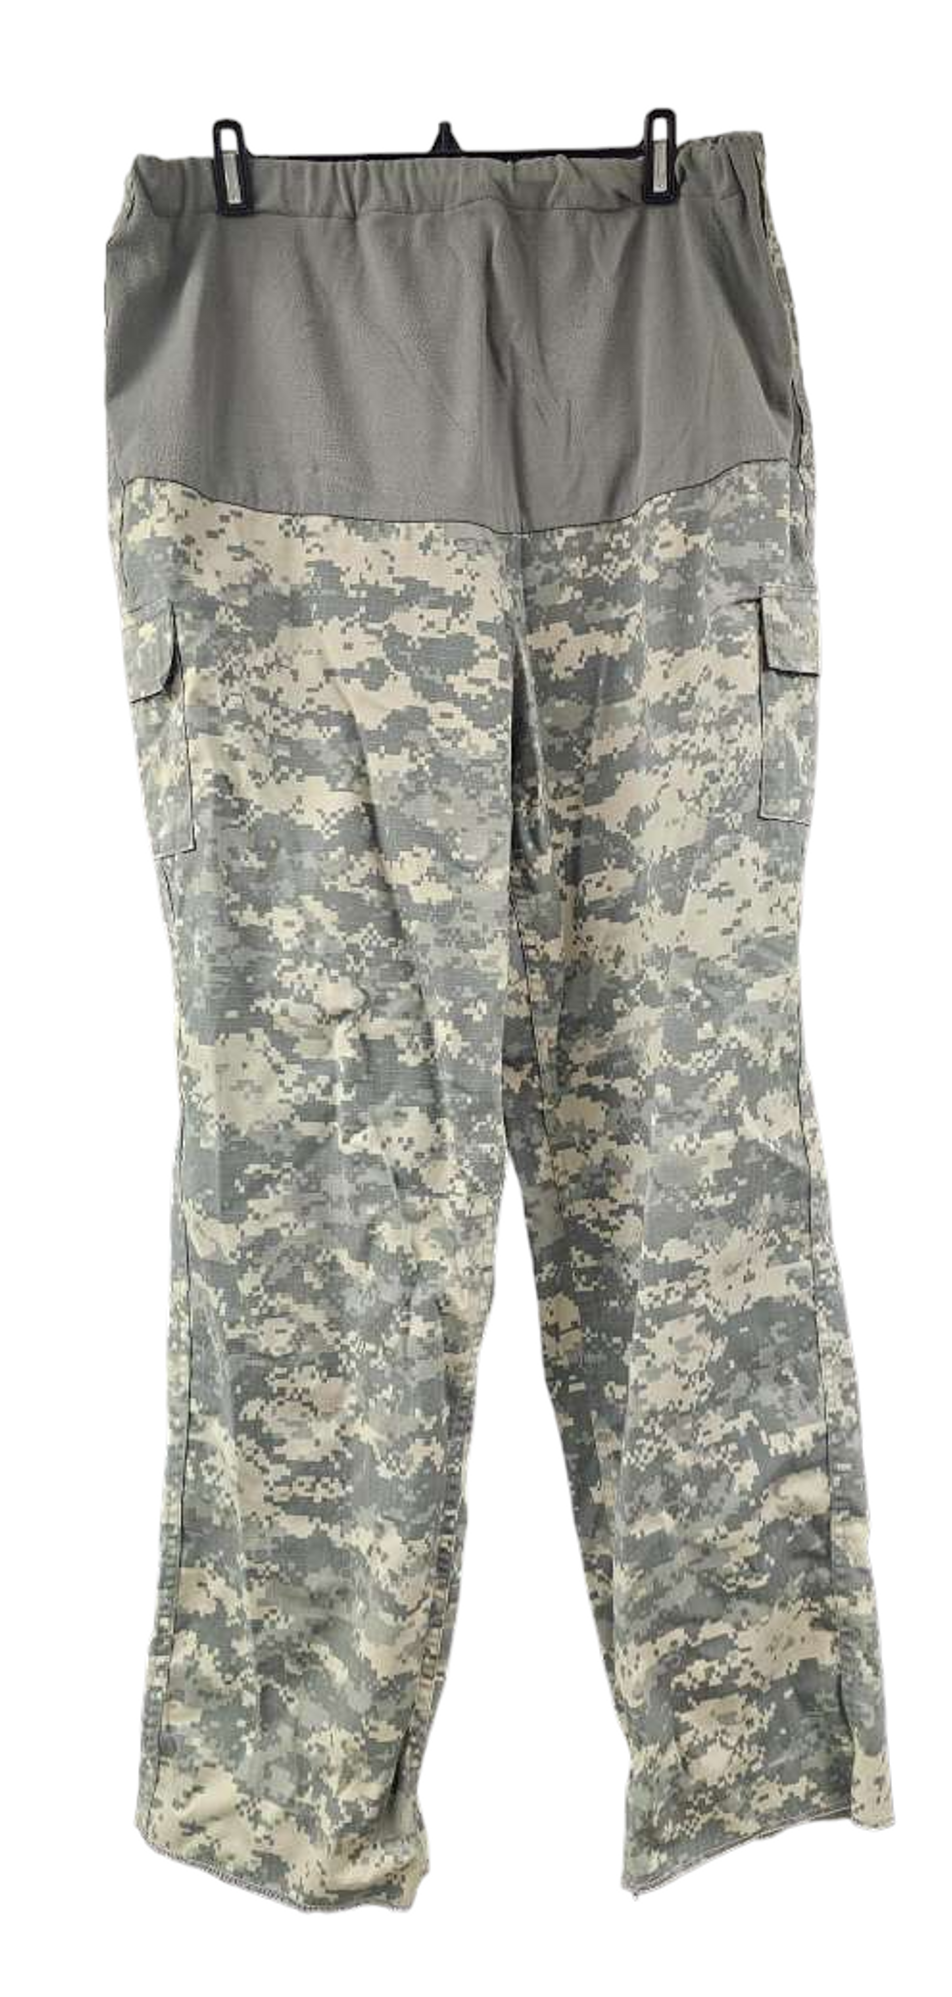 U.S. Armed Forces UCP Maternity Pants - Size 18 Regular